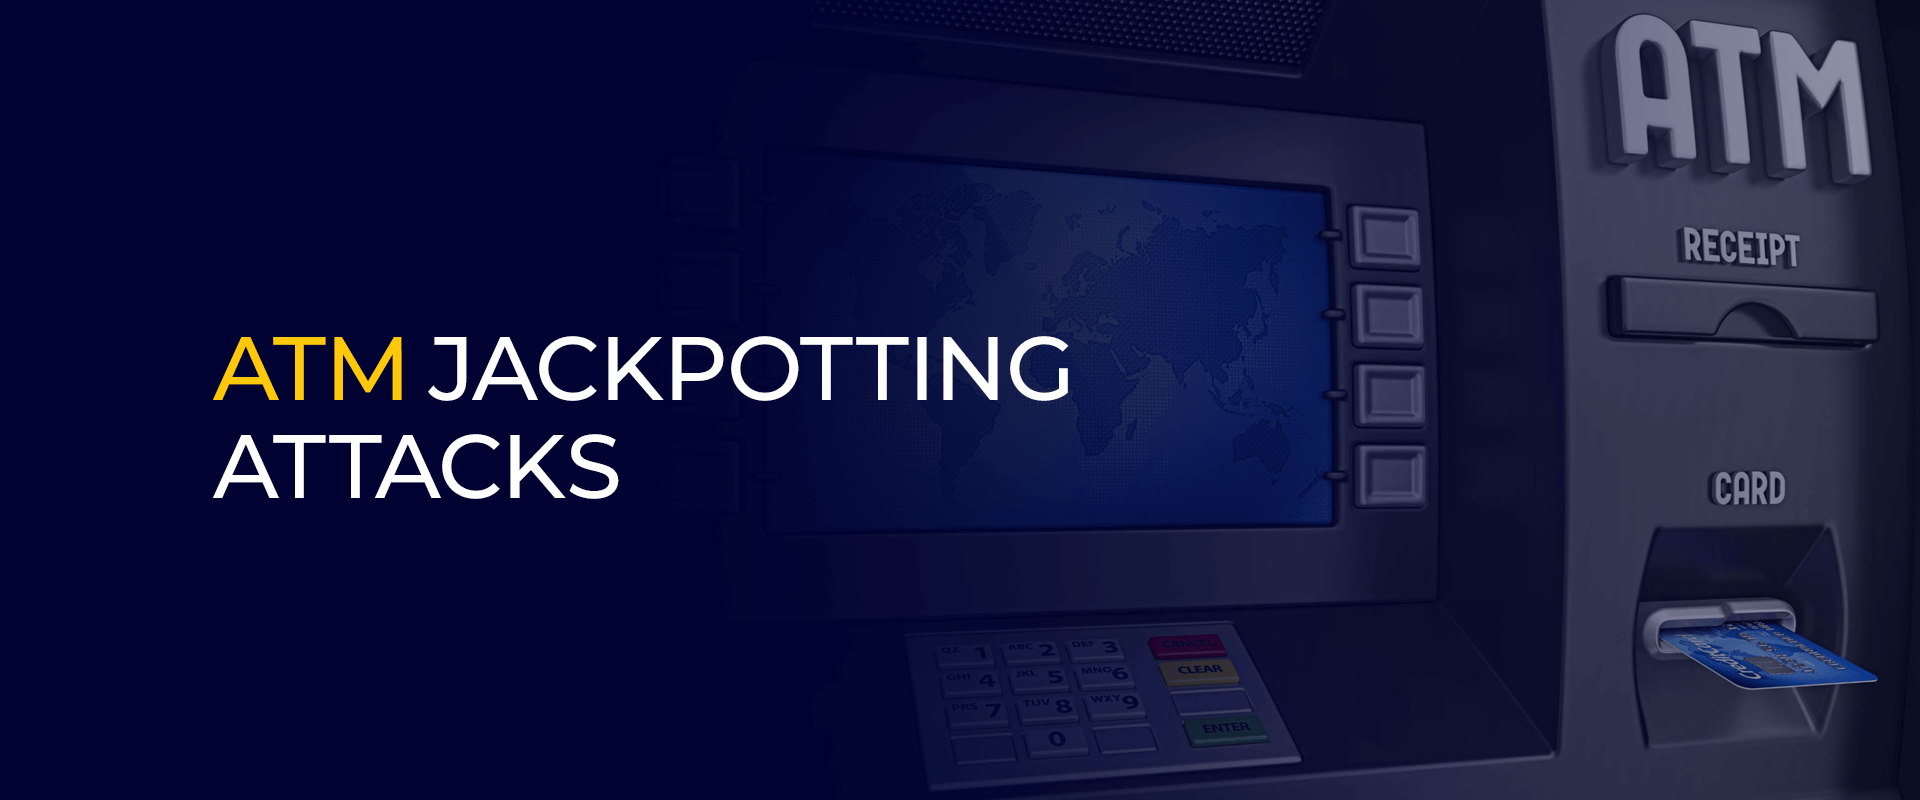 Jackpot-Angriffe auf Geldautomaten